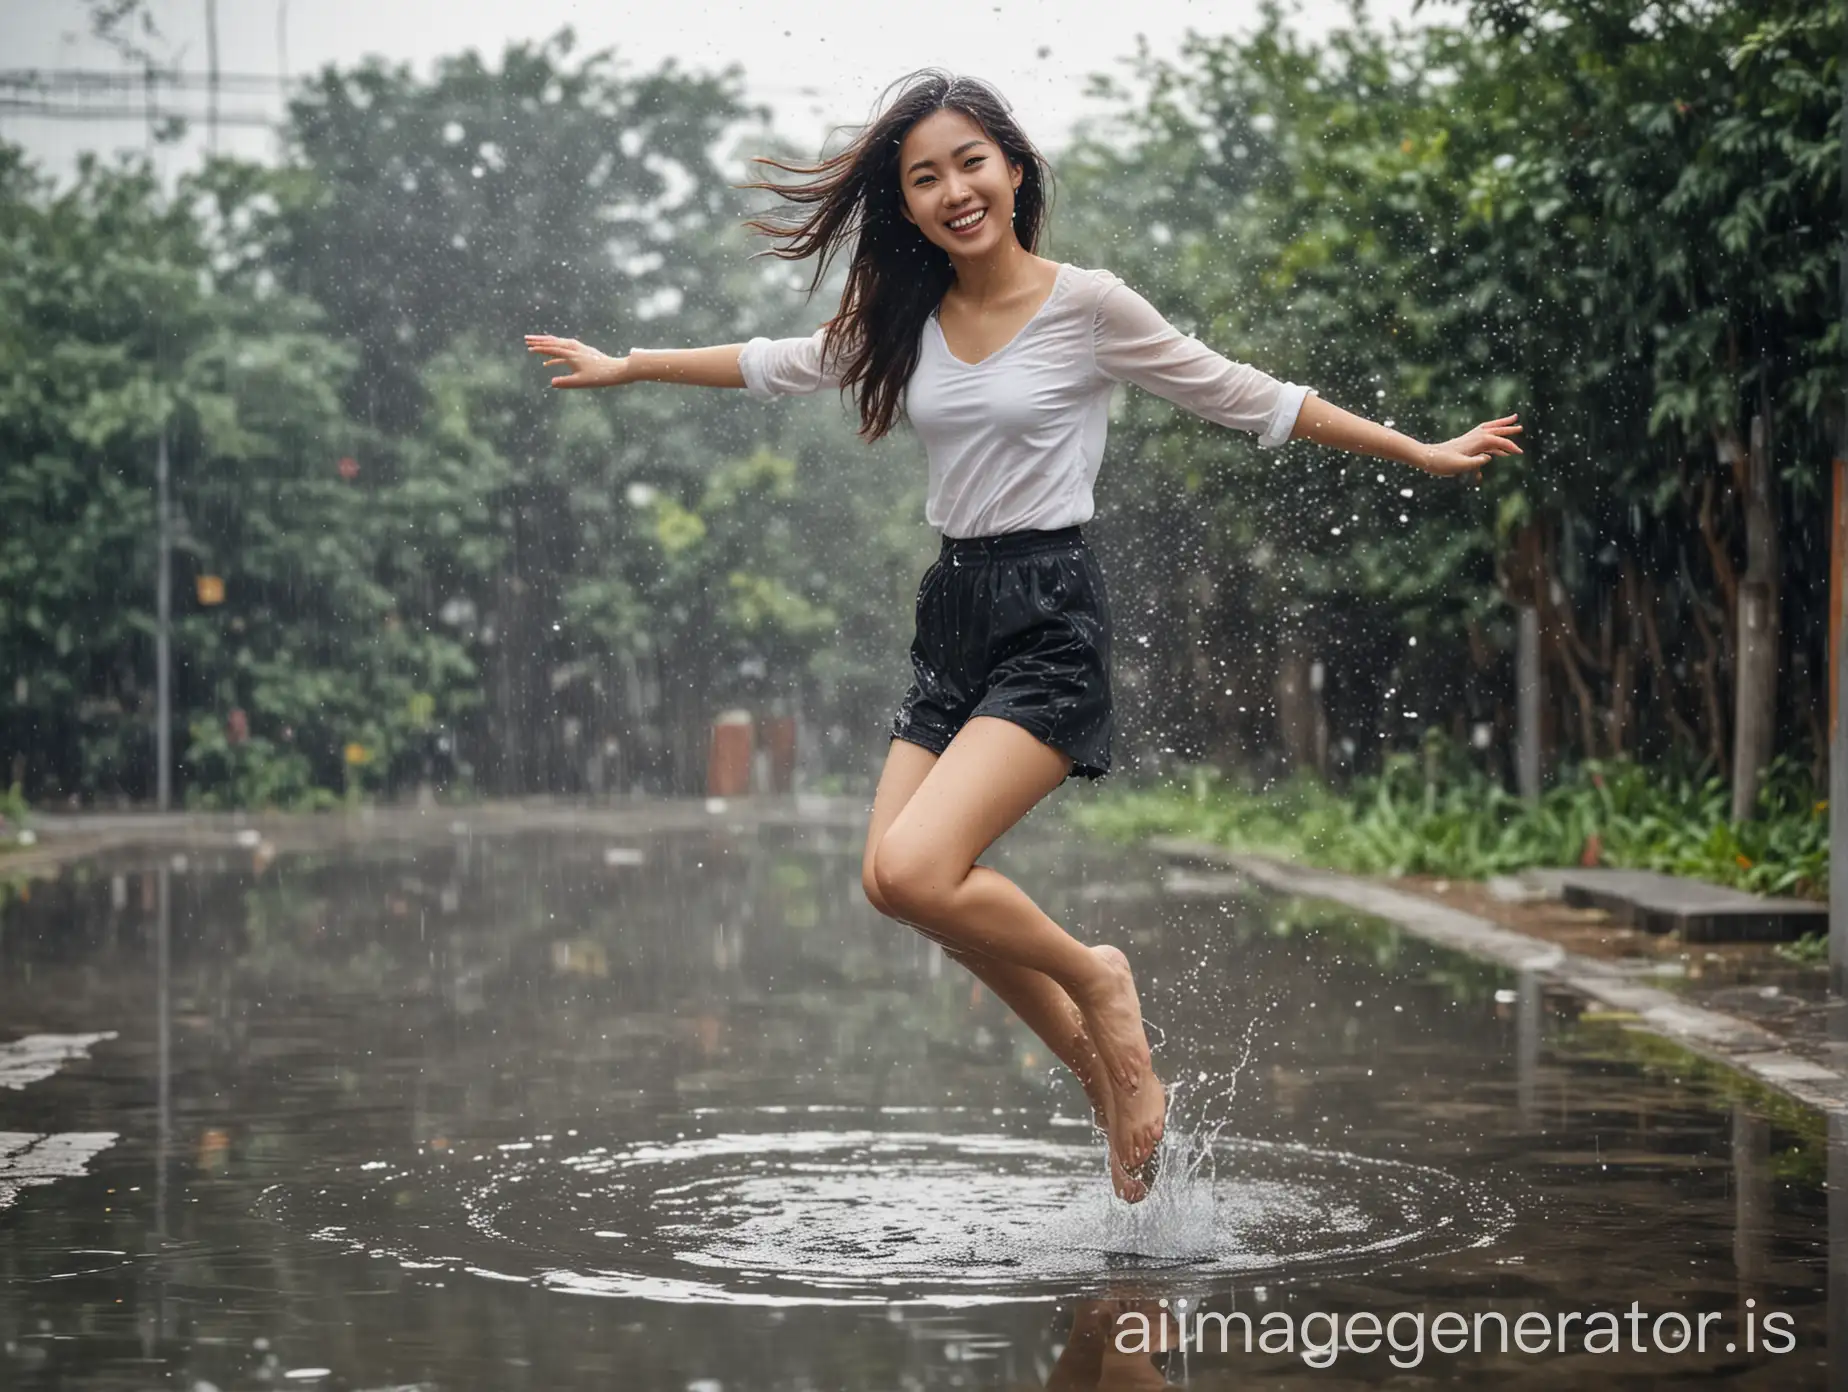 beautiful young asian woman, smiling, jumping on reflective puddle, water splashing high